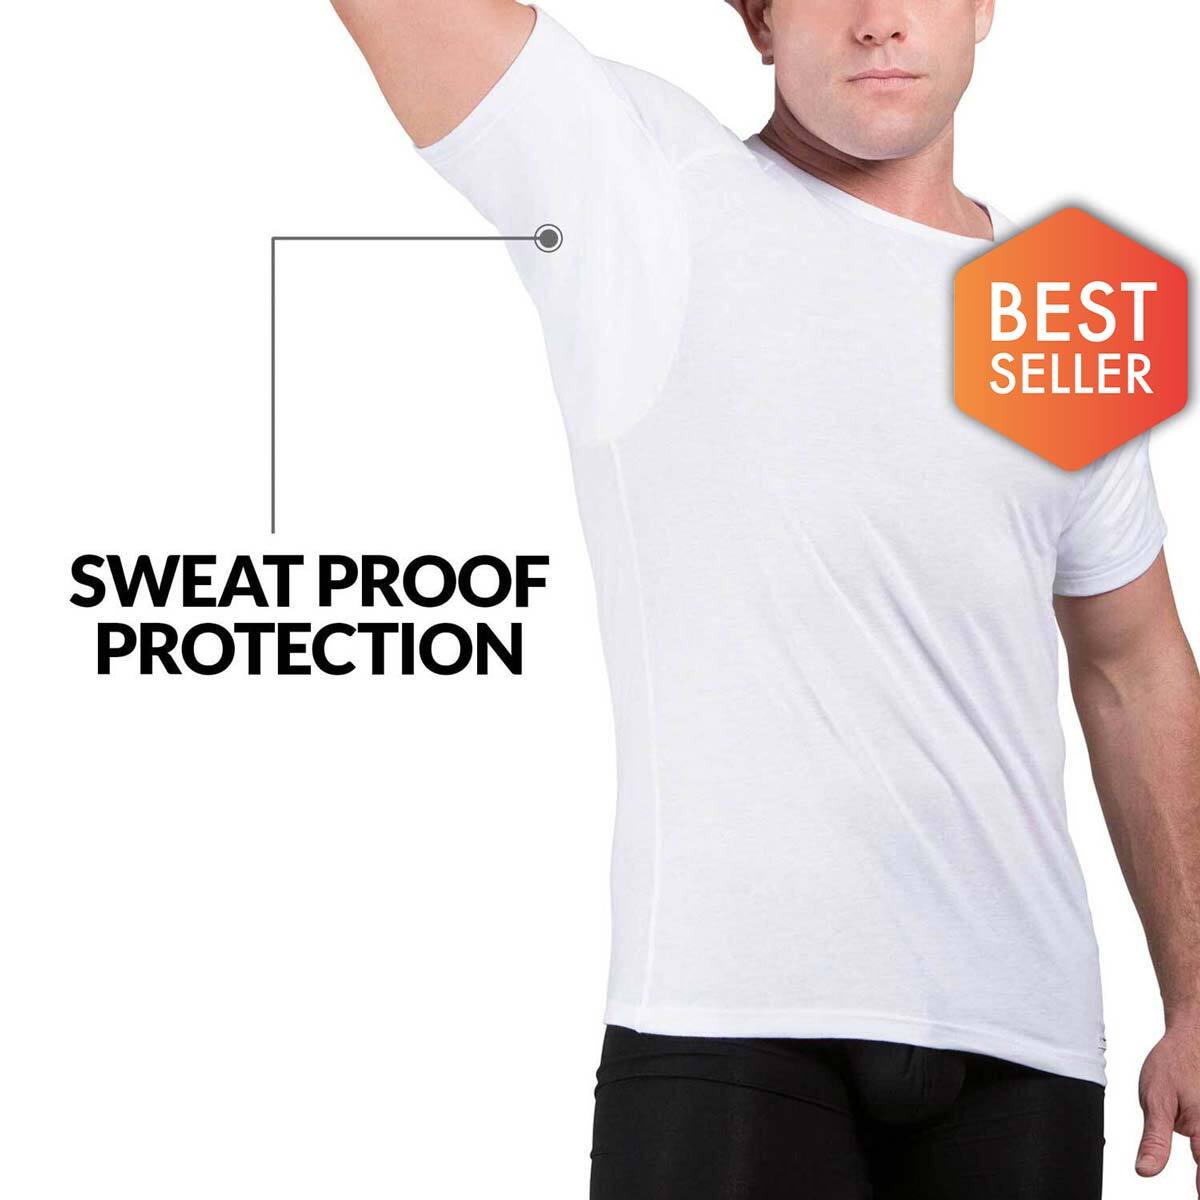 Ejis Men's Sweat Proof Undershirt, Crew Neck, Anti-Odor Silver, Cotton,  Sweat Pads (Small, White) price in Saudi Arabia,  Saudi Arabia